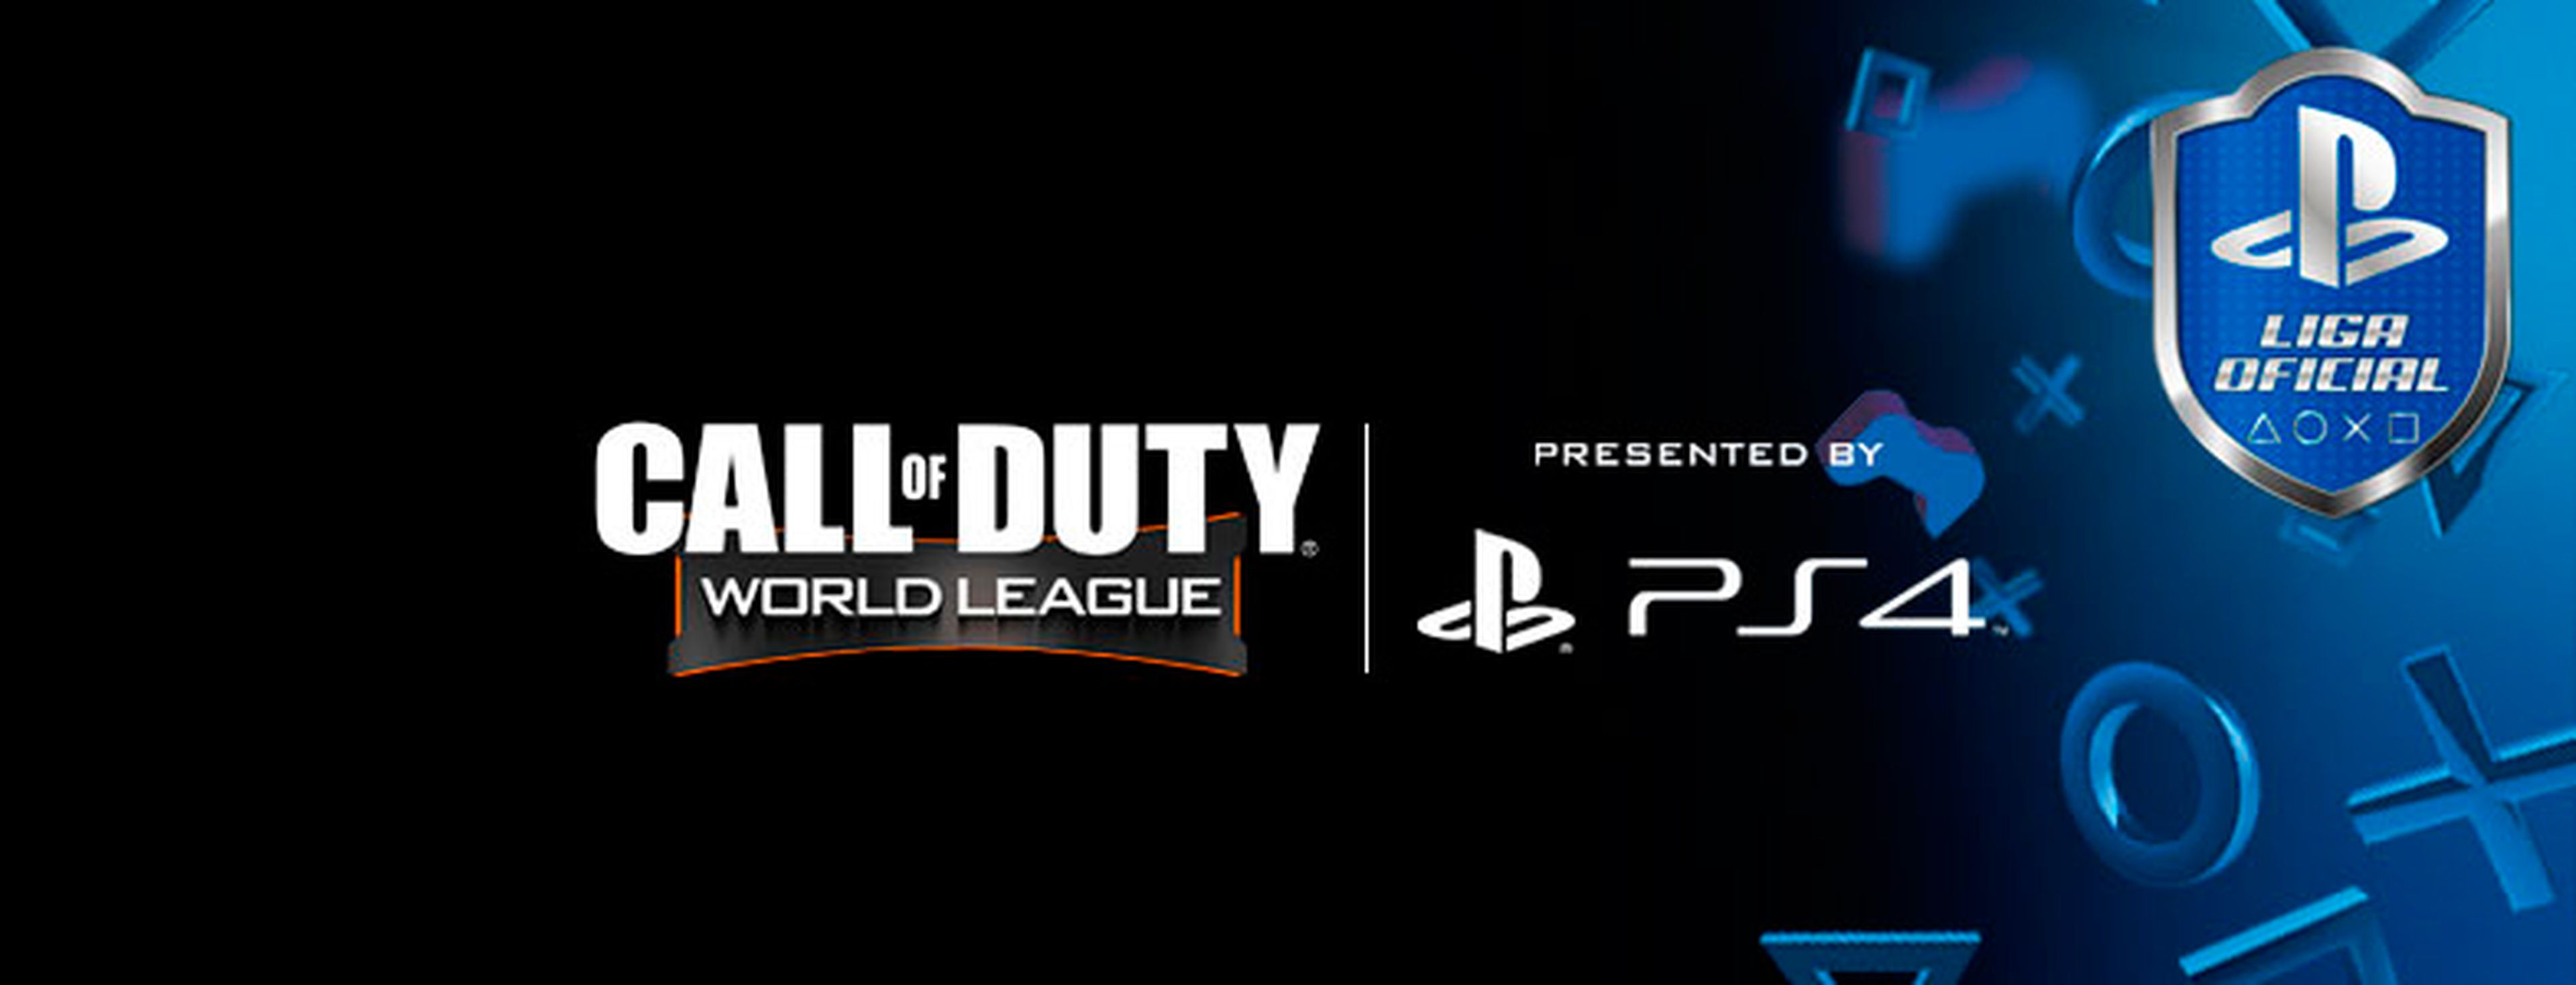 Call of Duty Liga Oficial PlayStation